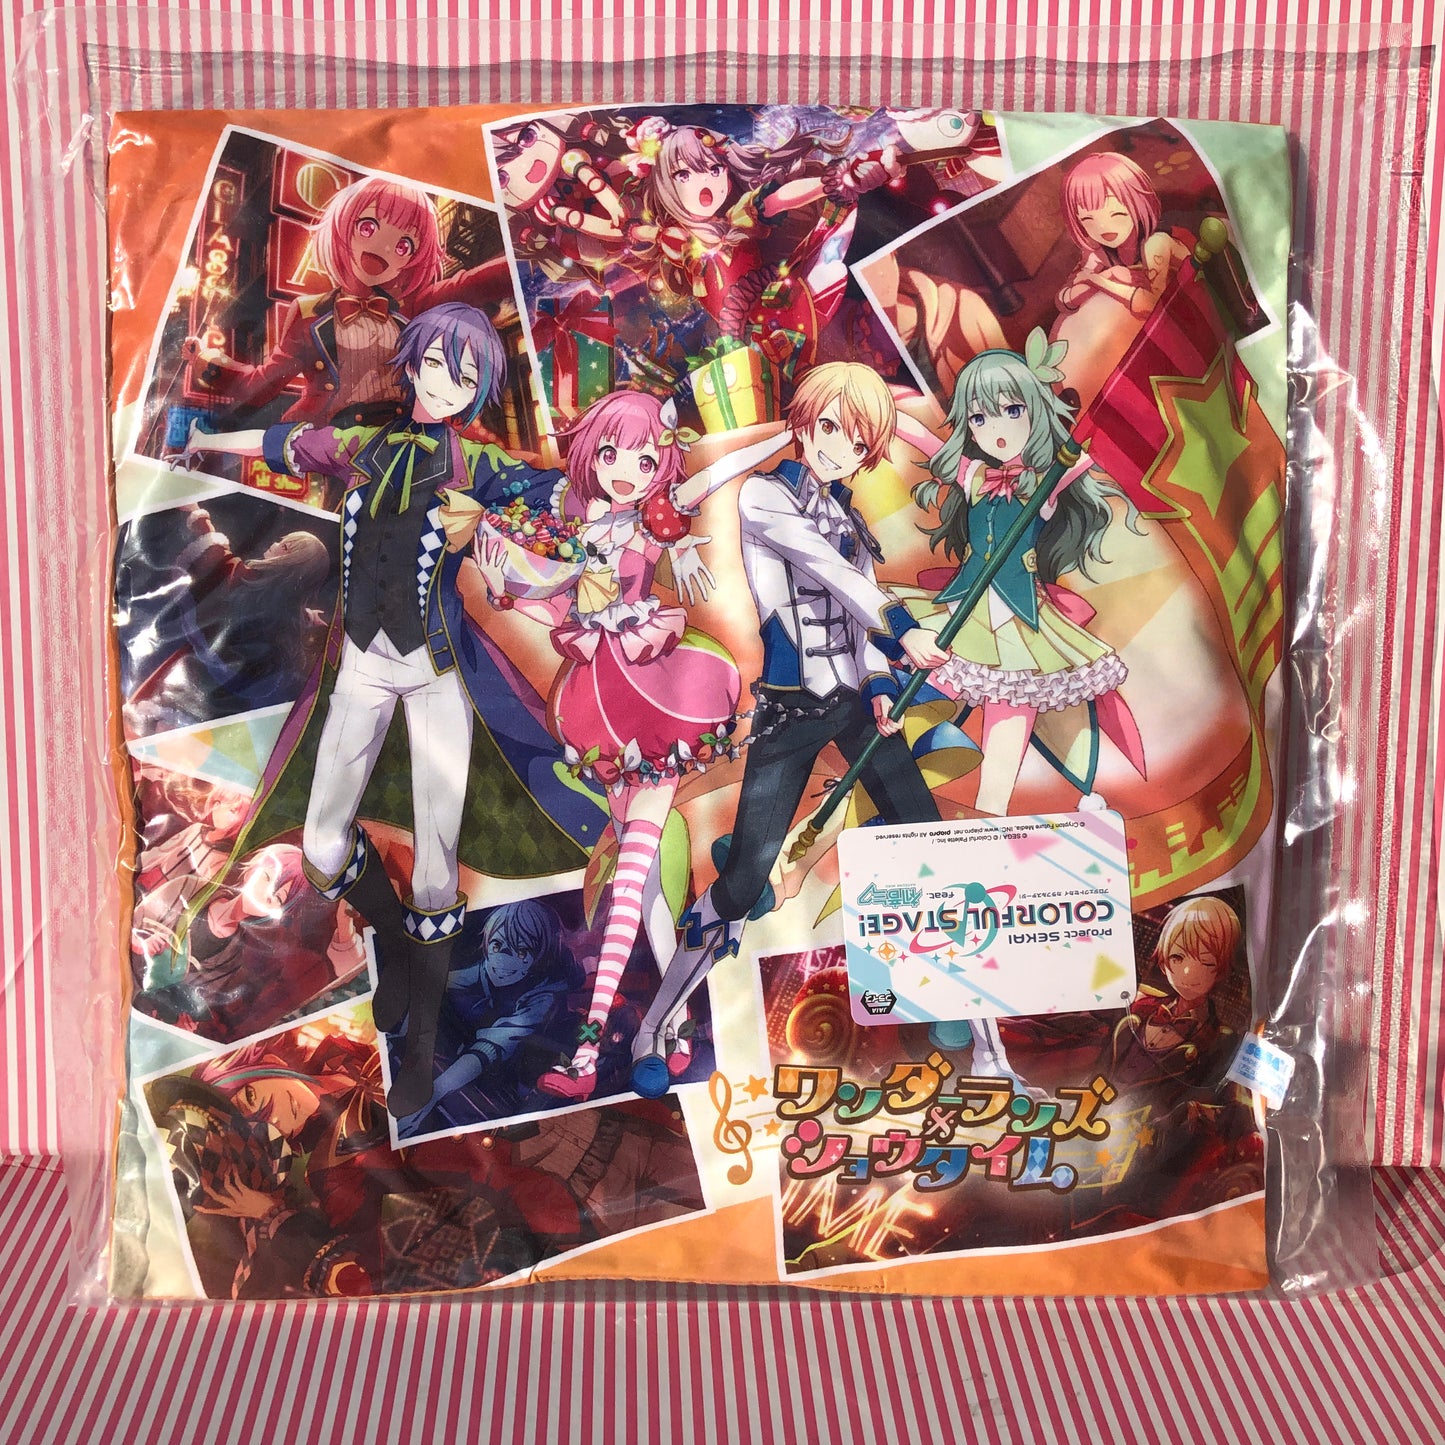 New Project Sekai Colorful Stage Cushion! ft. Hatsune Miku - Wonderlands x Showtime